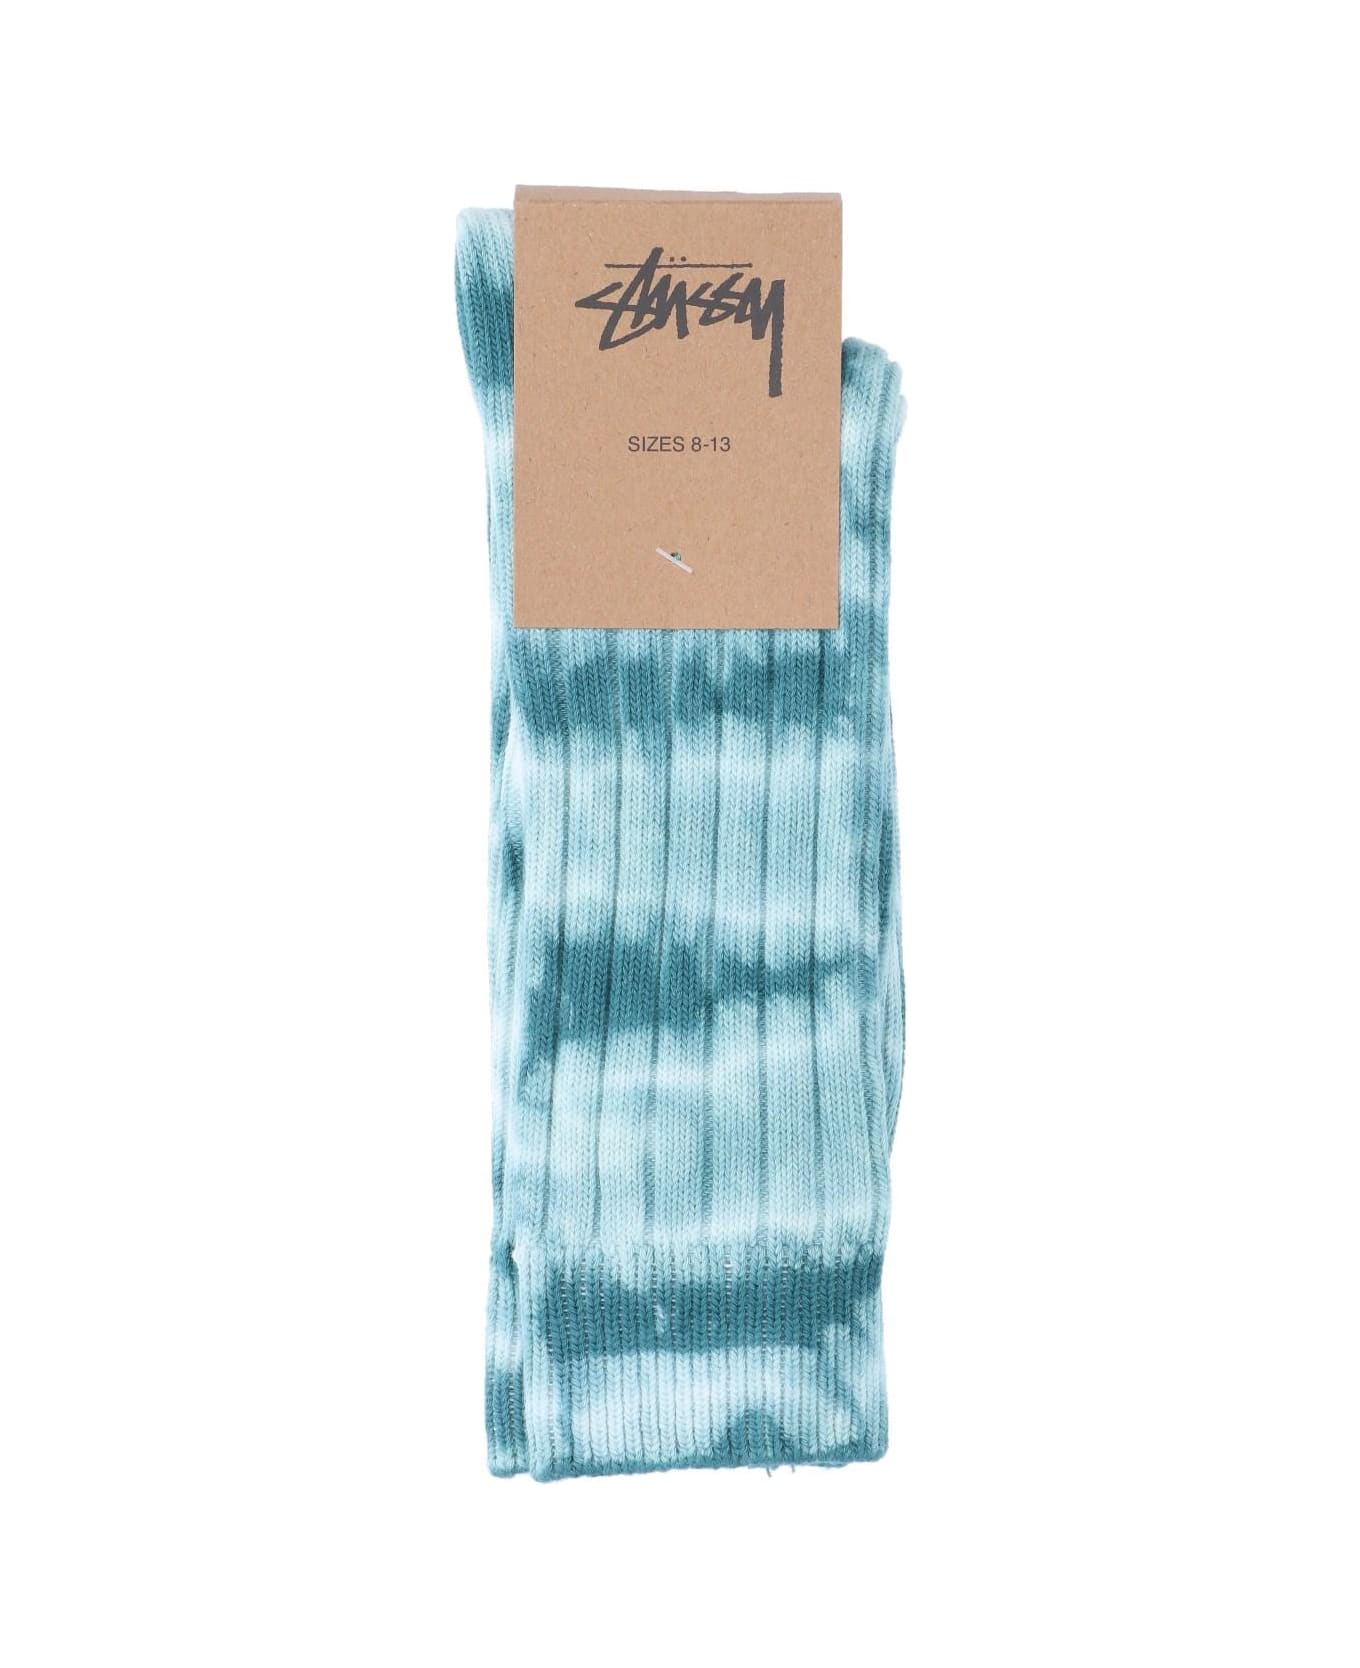 Stussy 'dyed' Socks - Teal